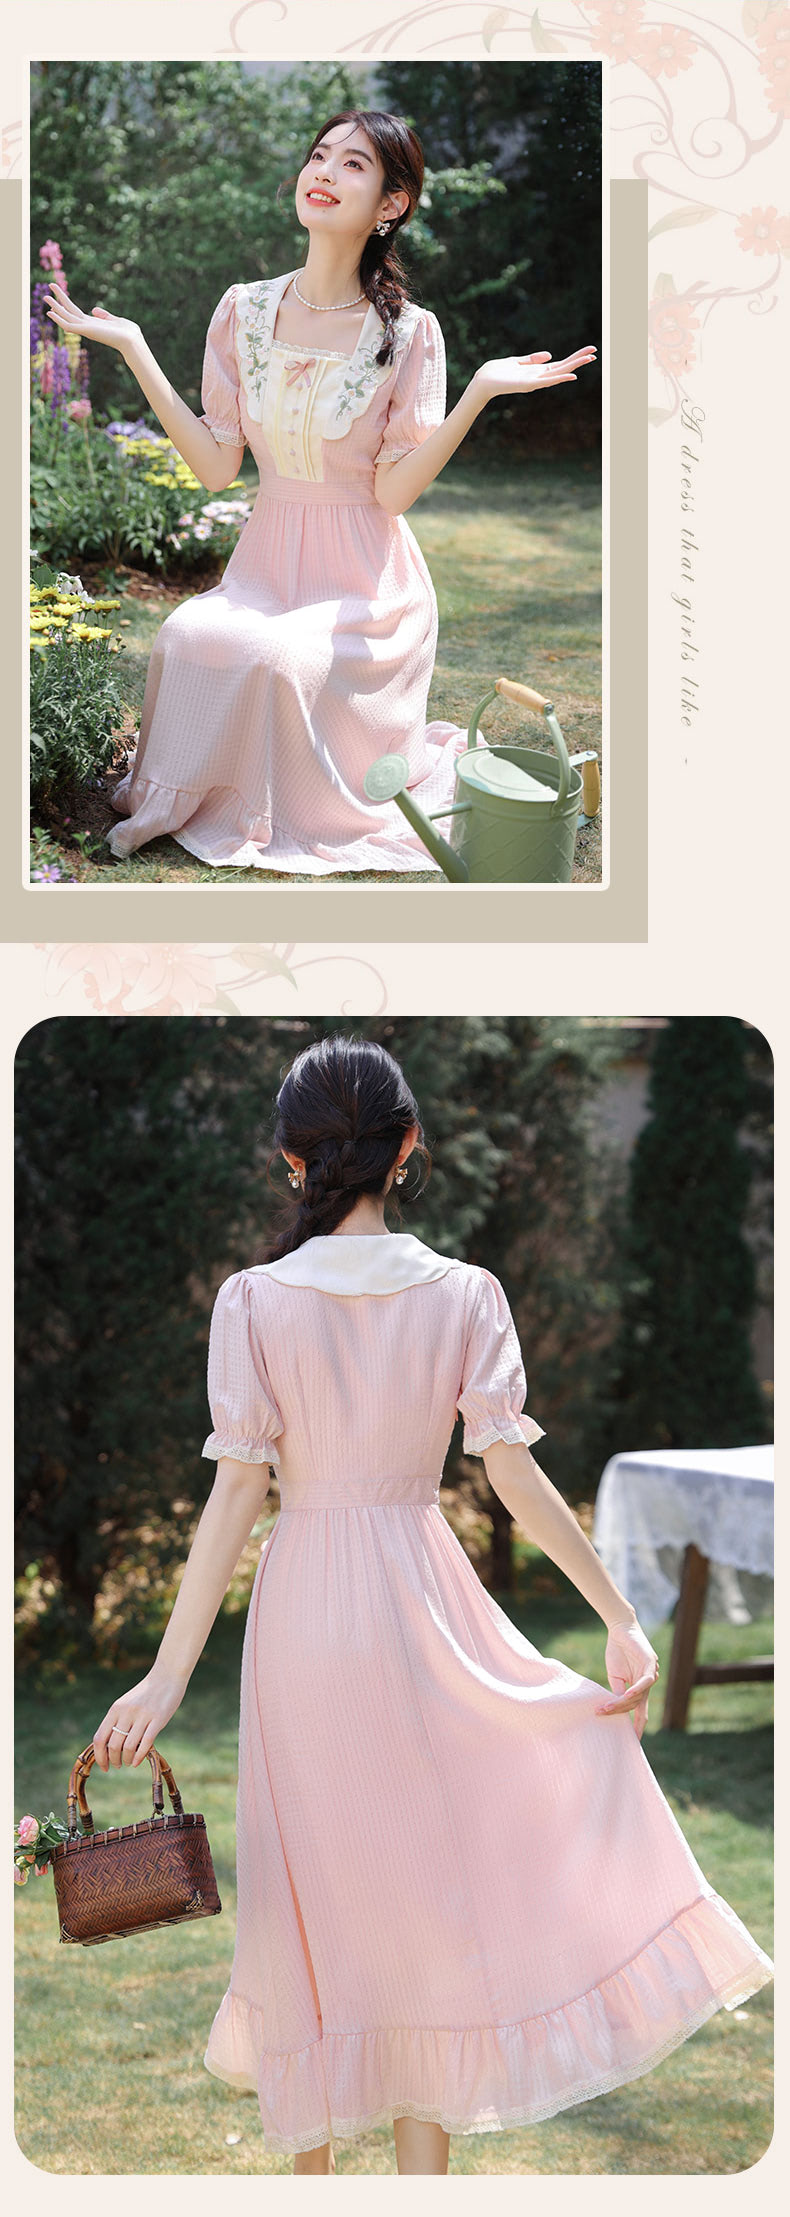 Romance-Vintage-Plaid-Embroidery-Summer-Casual-Long-Dress10.jpg